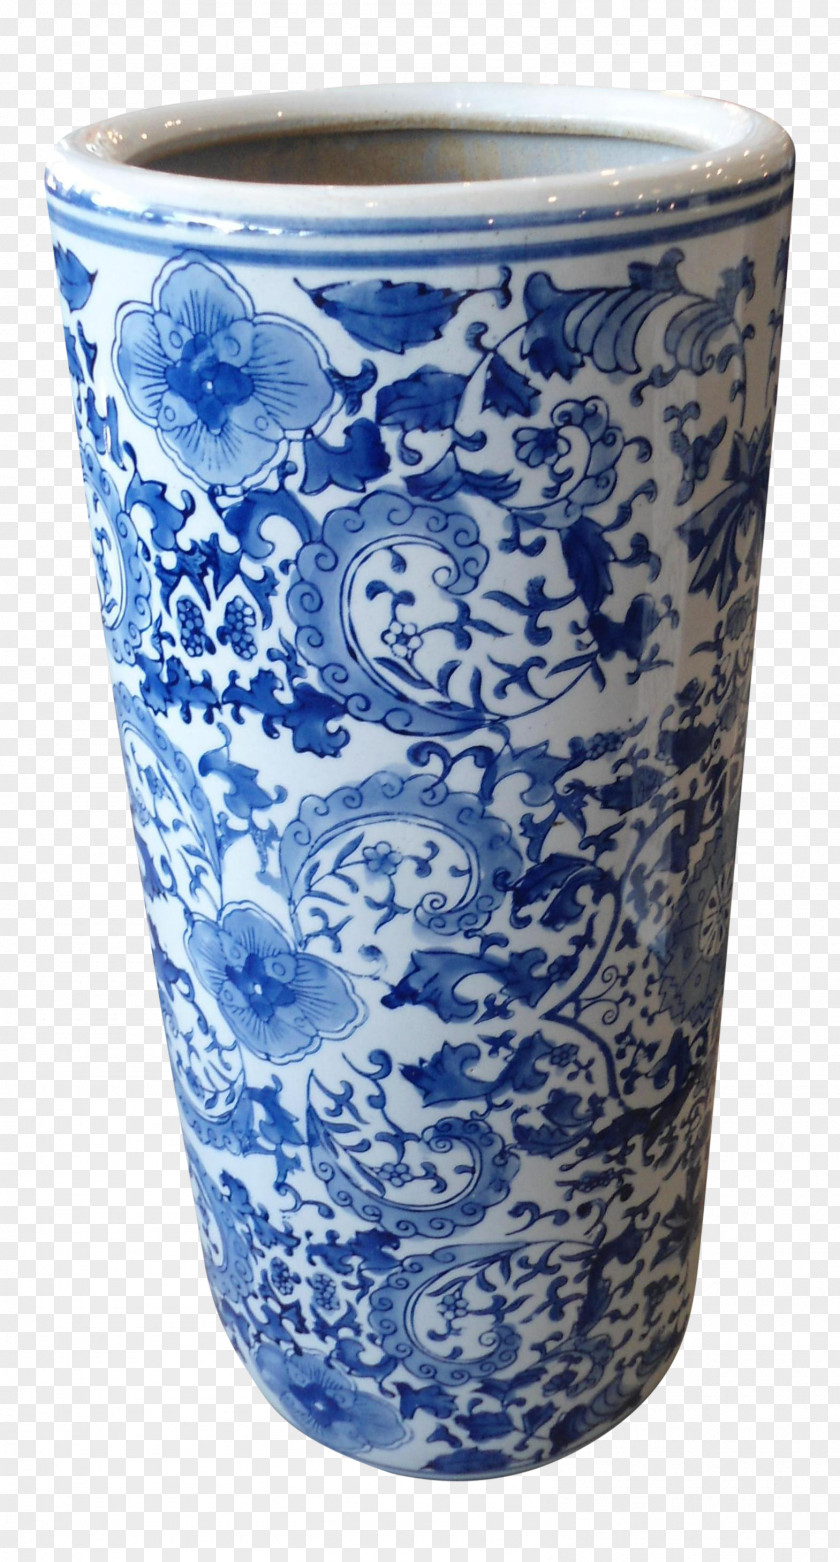 The Blue And White Porcelain Vase Pottery Ceramic Cobalt Glass PNG